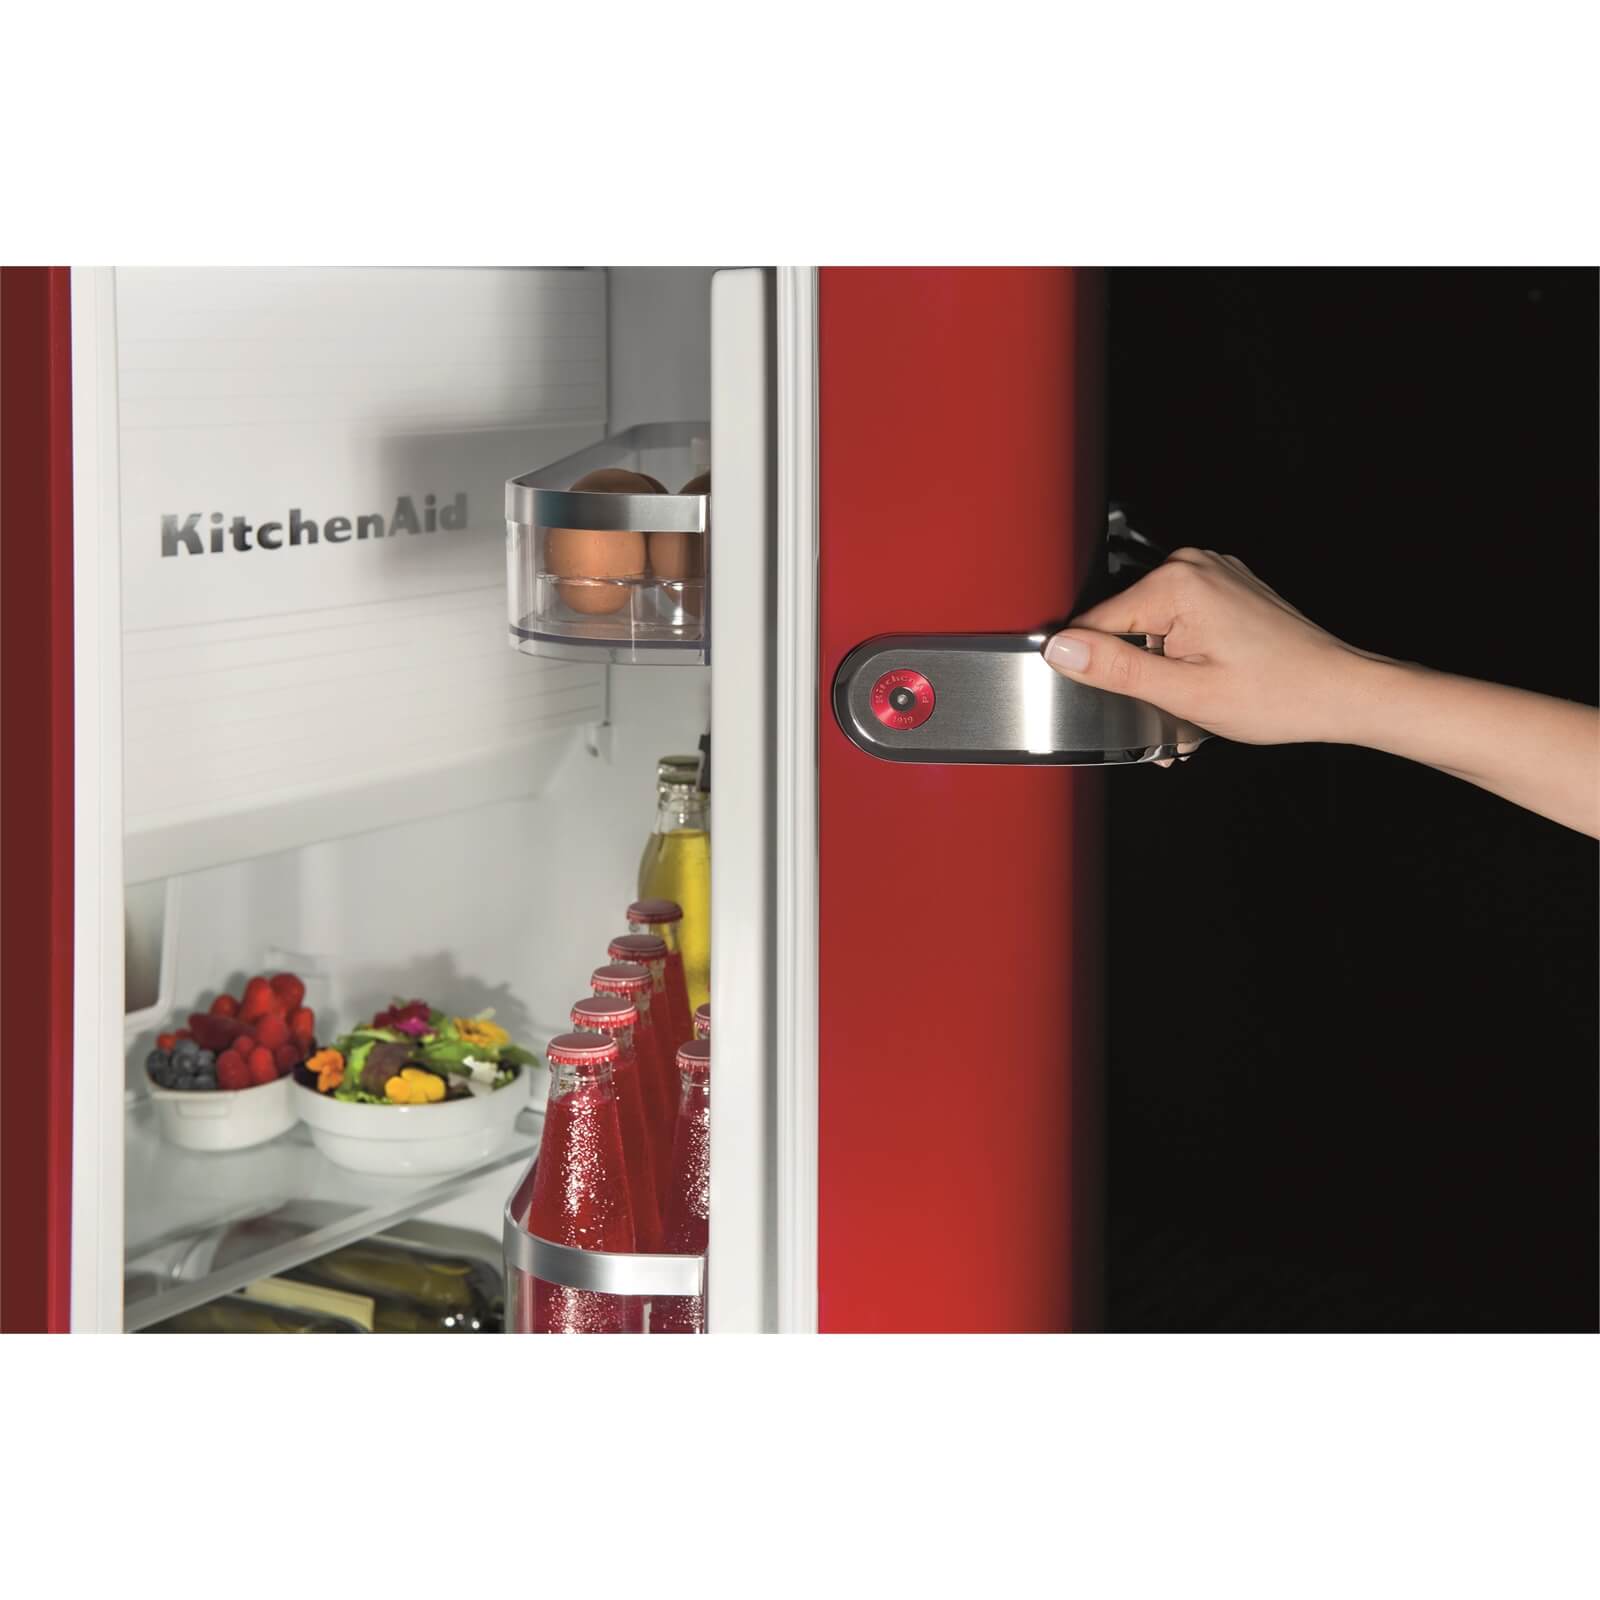 KitchenAid KCFME 60150R UK Fridge - Red